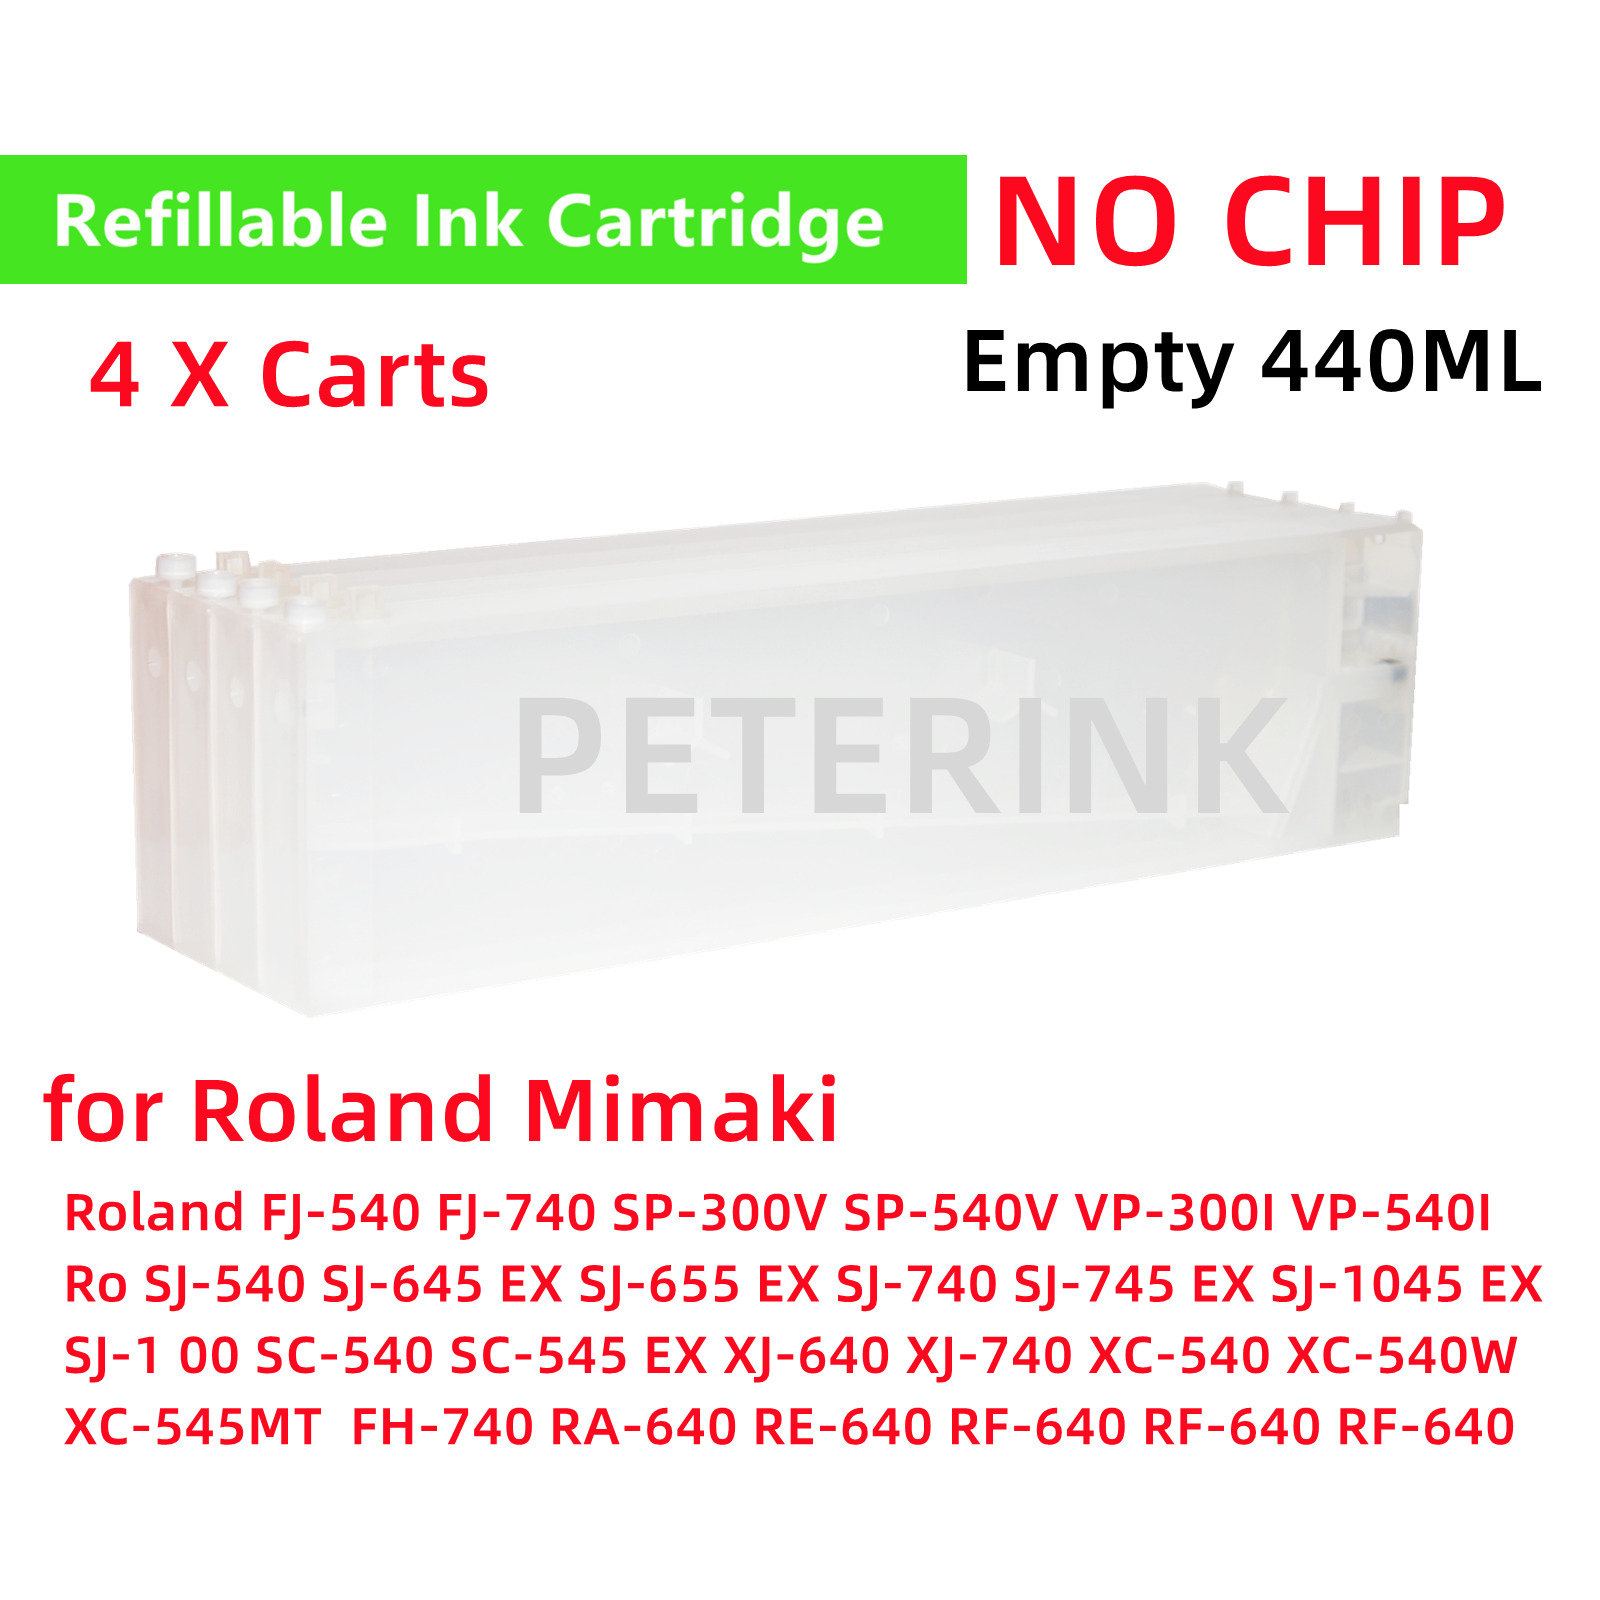 Empty 440ML Refillable Ink Cartridge 4 Roland Mutoh Mimaki SJ-745 EX SJ-1045 EX